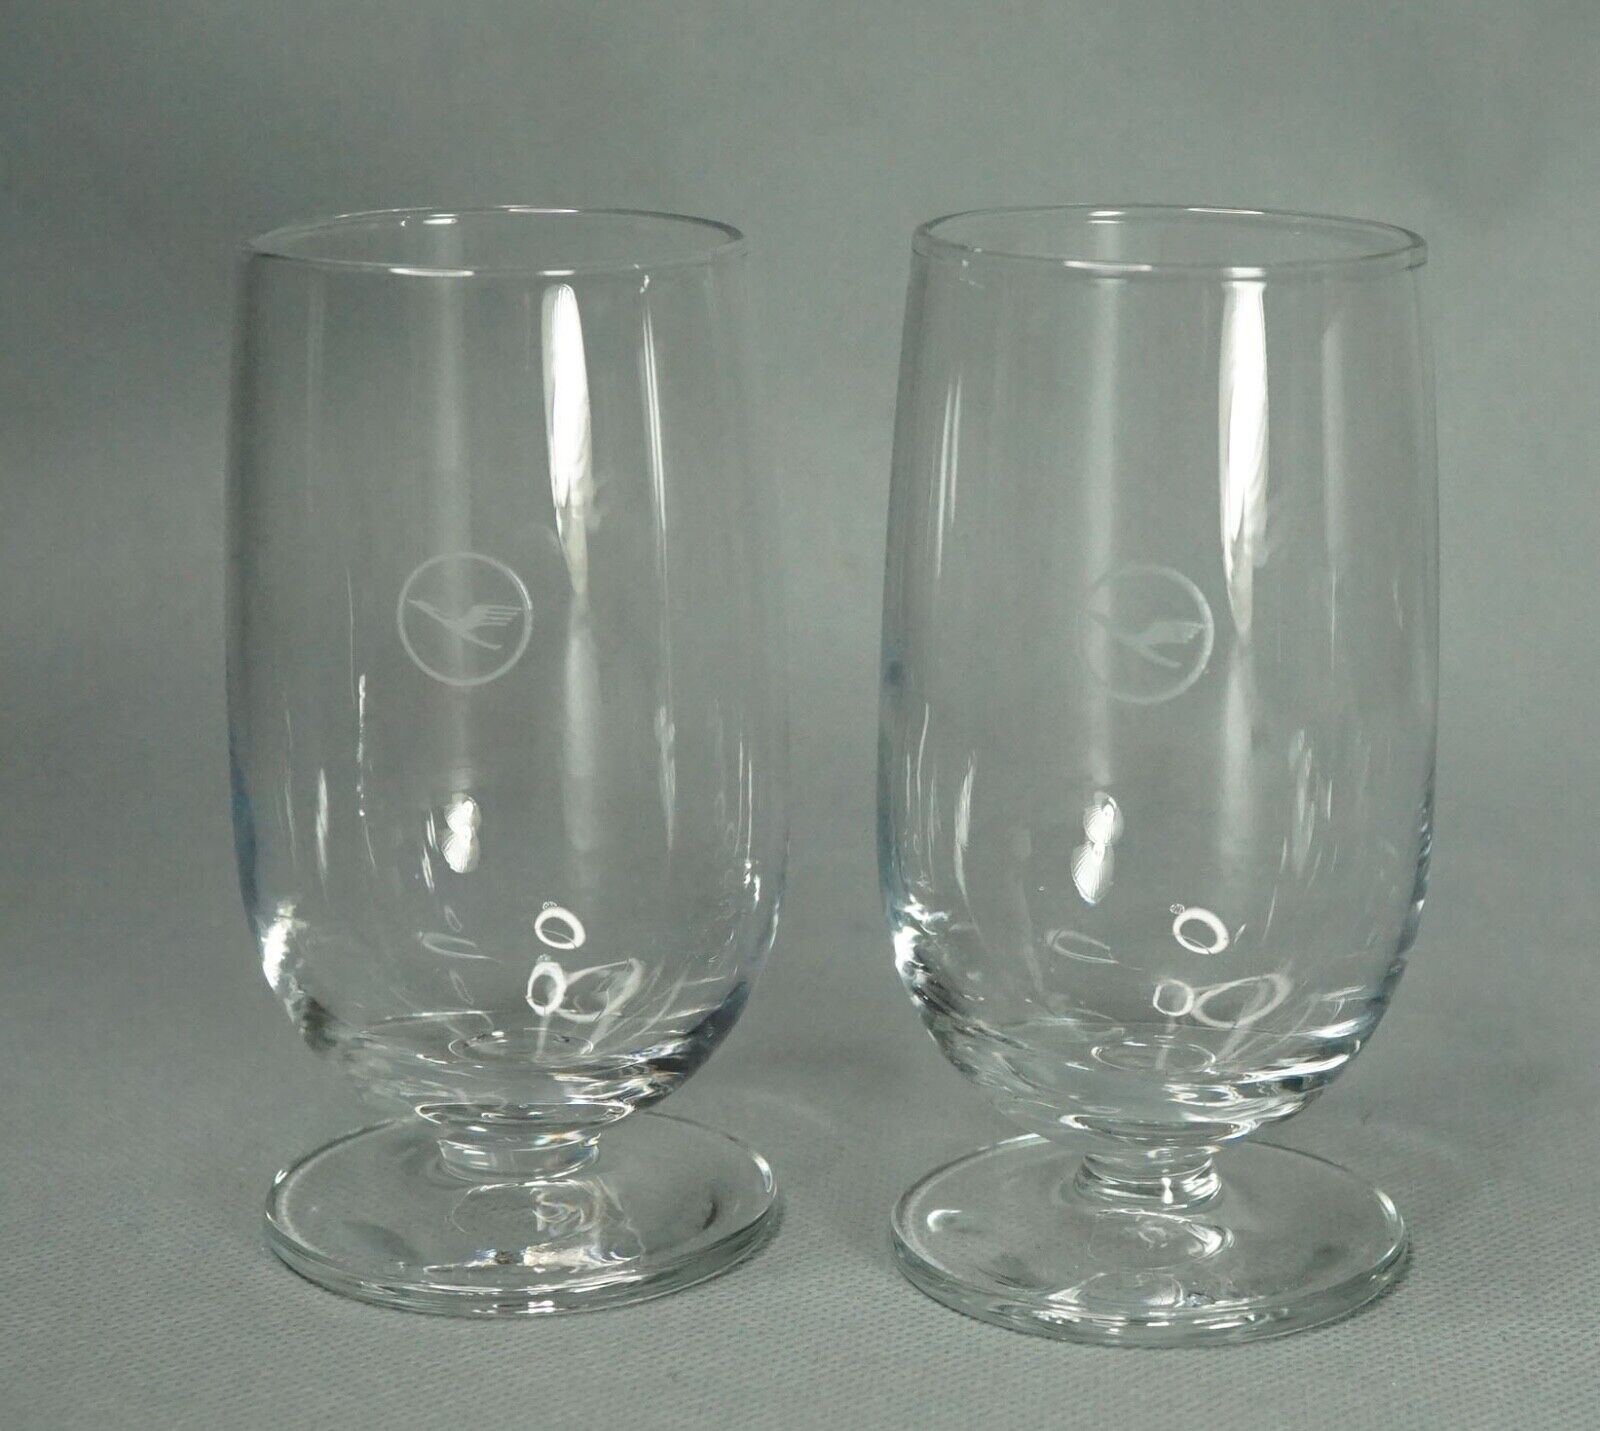 2x Lufthansa Airlines Crystal Glasses Set Short Stem Cups Premium Business Class